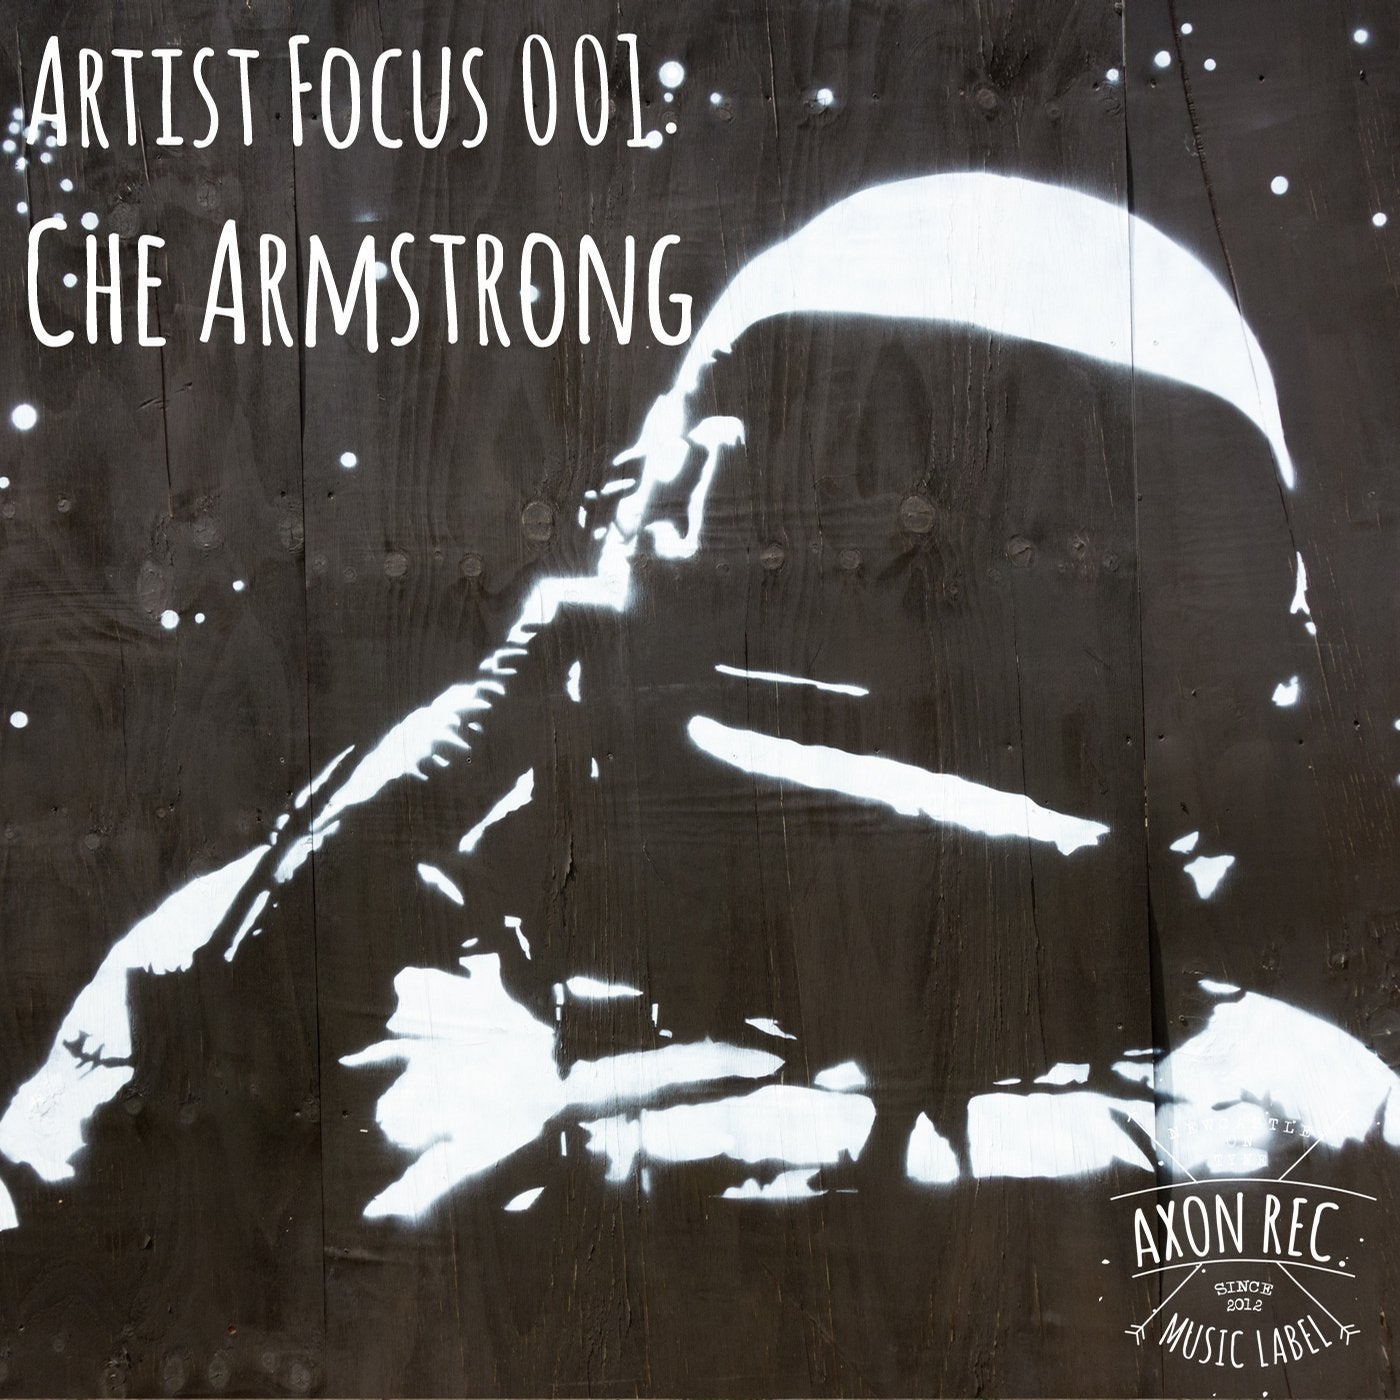 Artist Focus 001: Che Armstrong